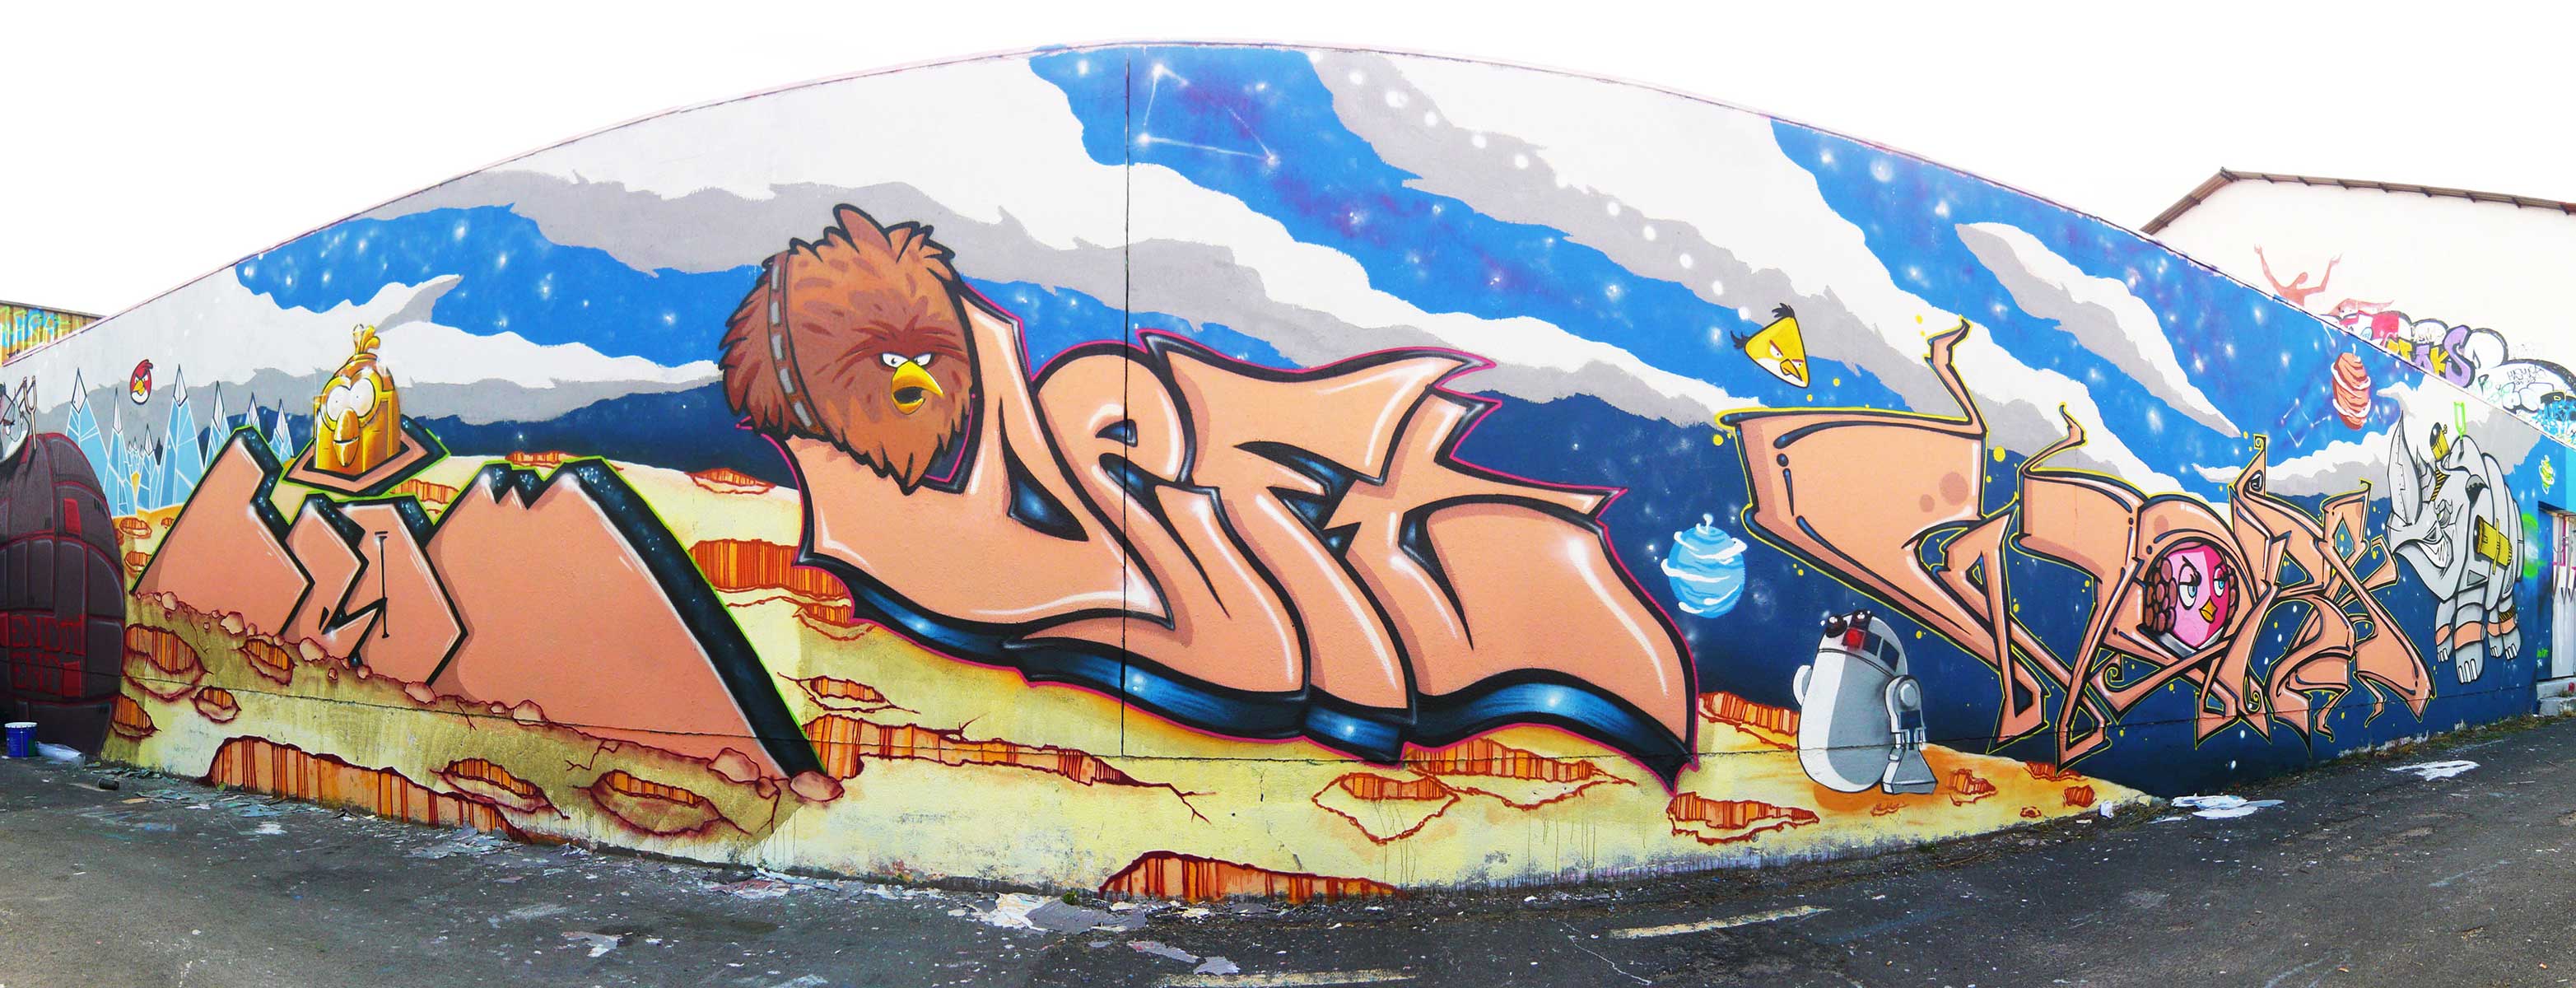 angry-birds-graffiti-3